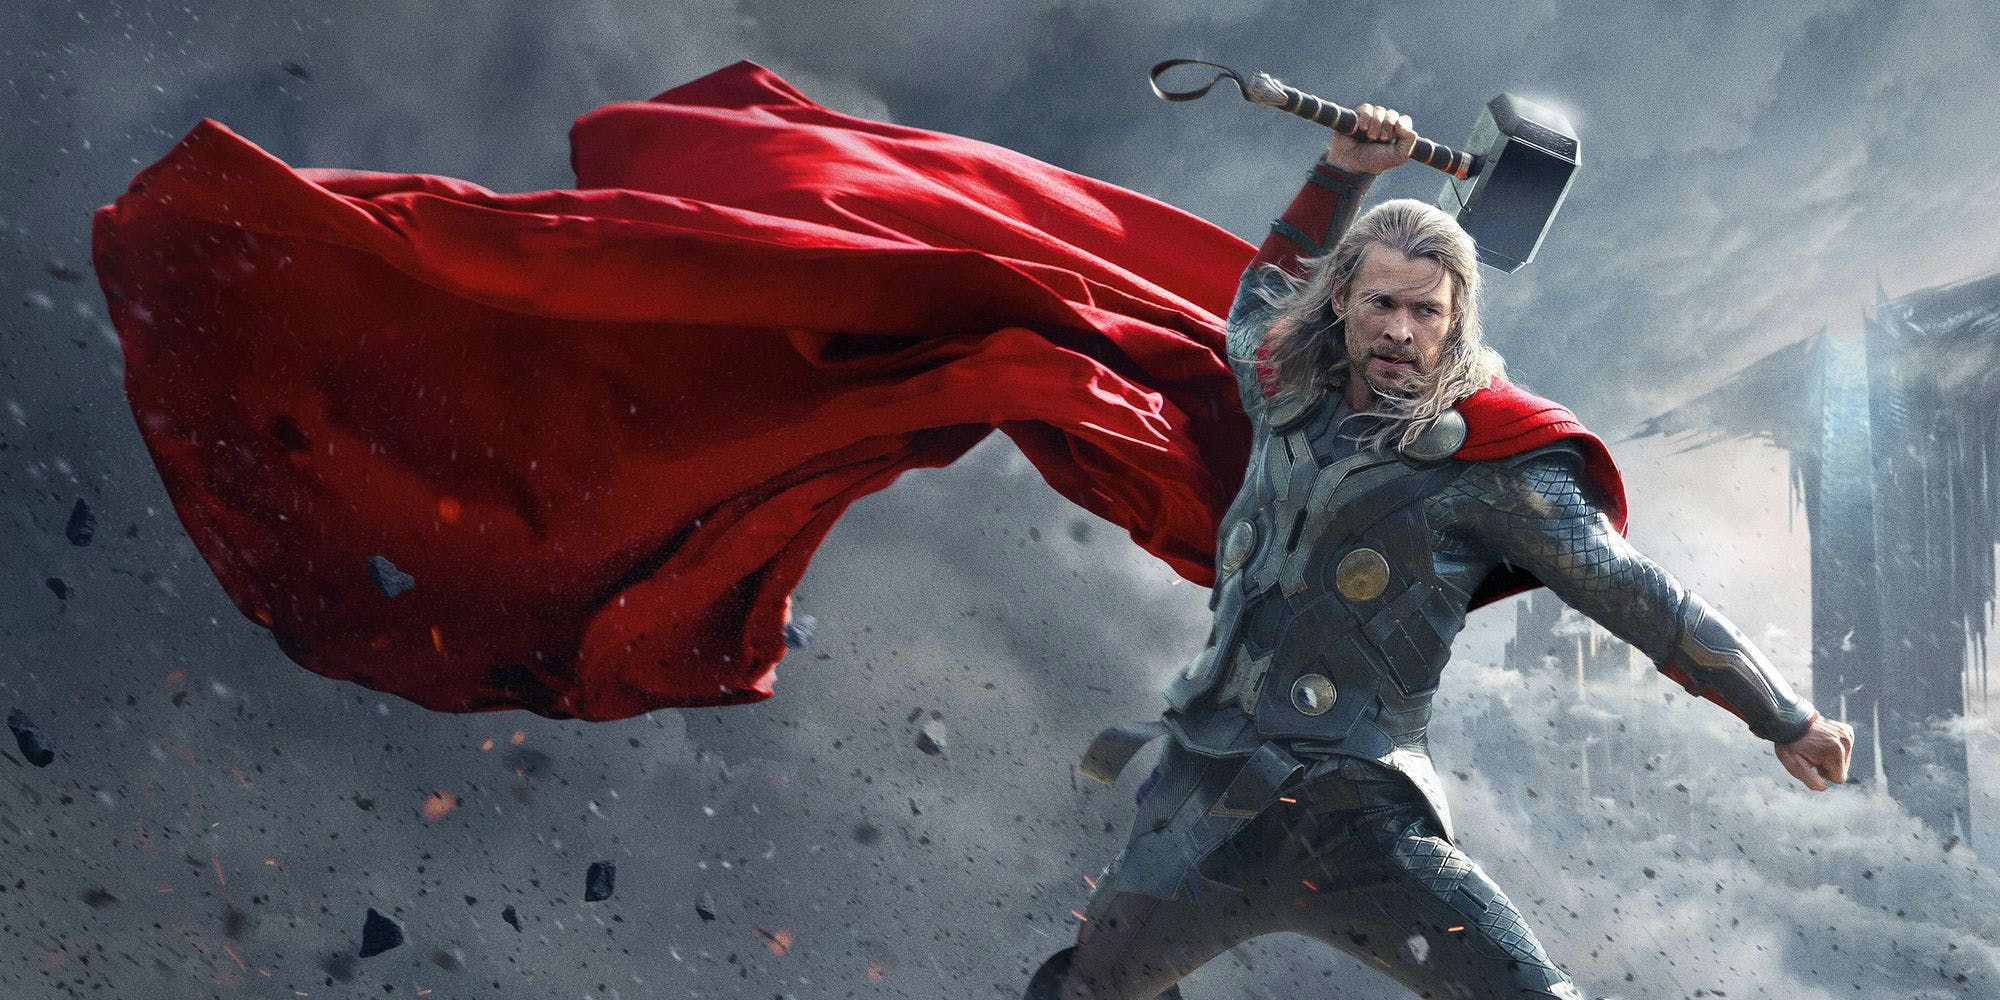 Chris Hemsworth as Thor Raising Hammer